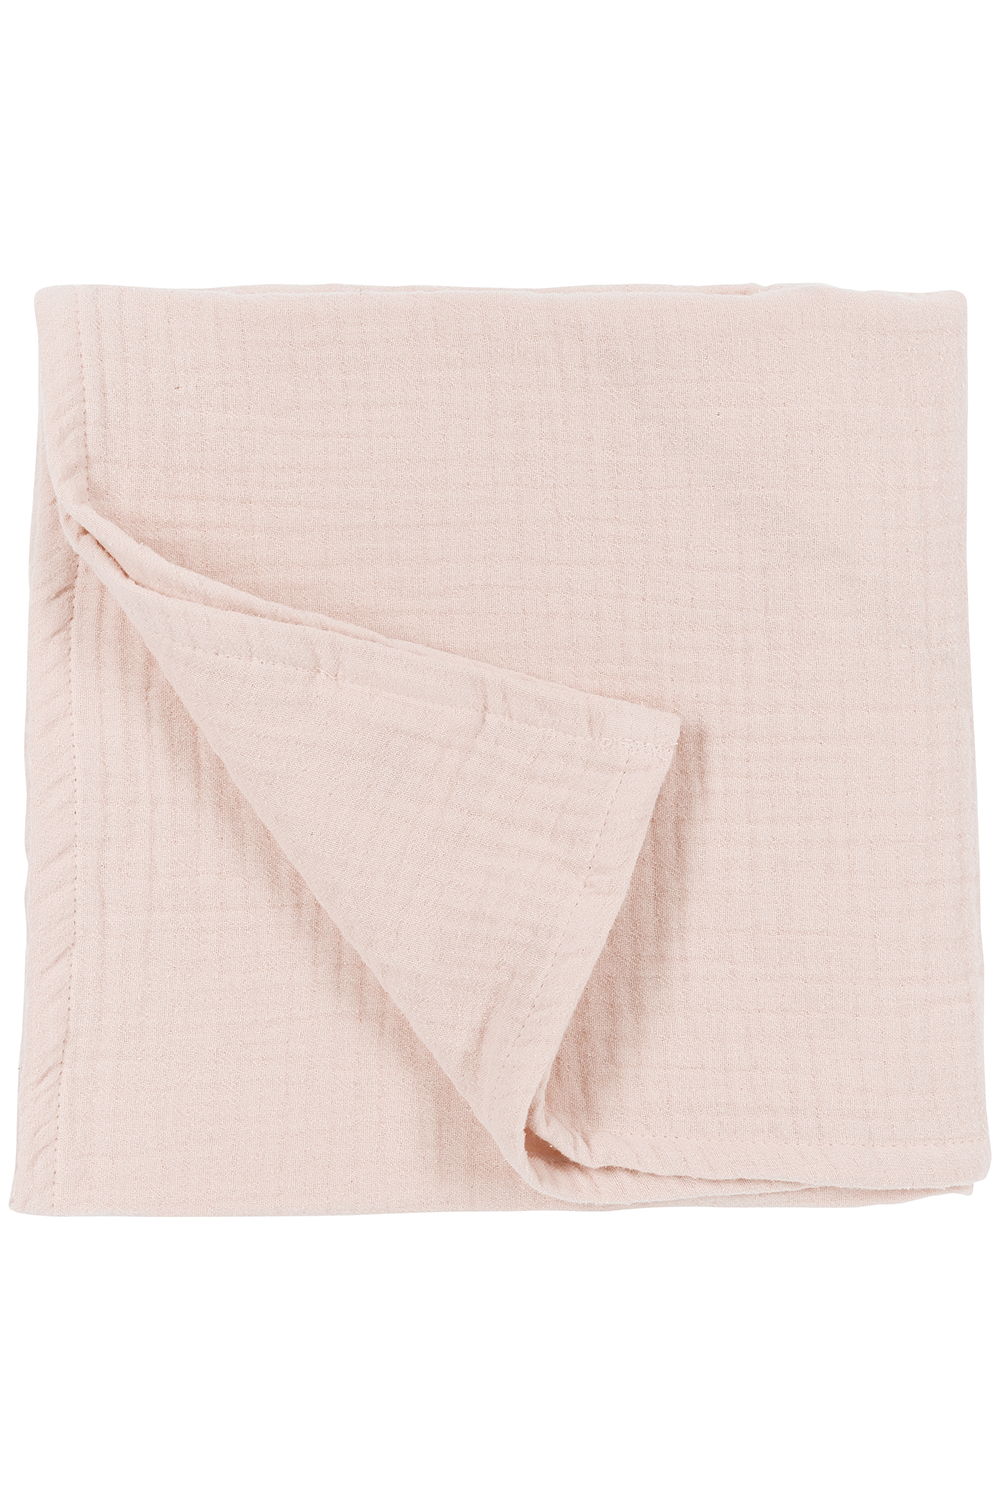 Blanket pre-washed muslin Uni - soft pink - 140x200cm